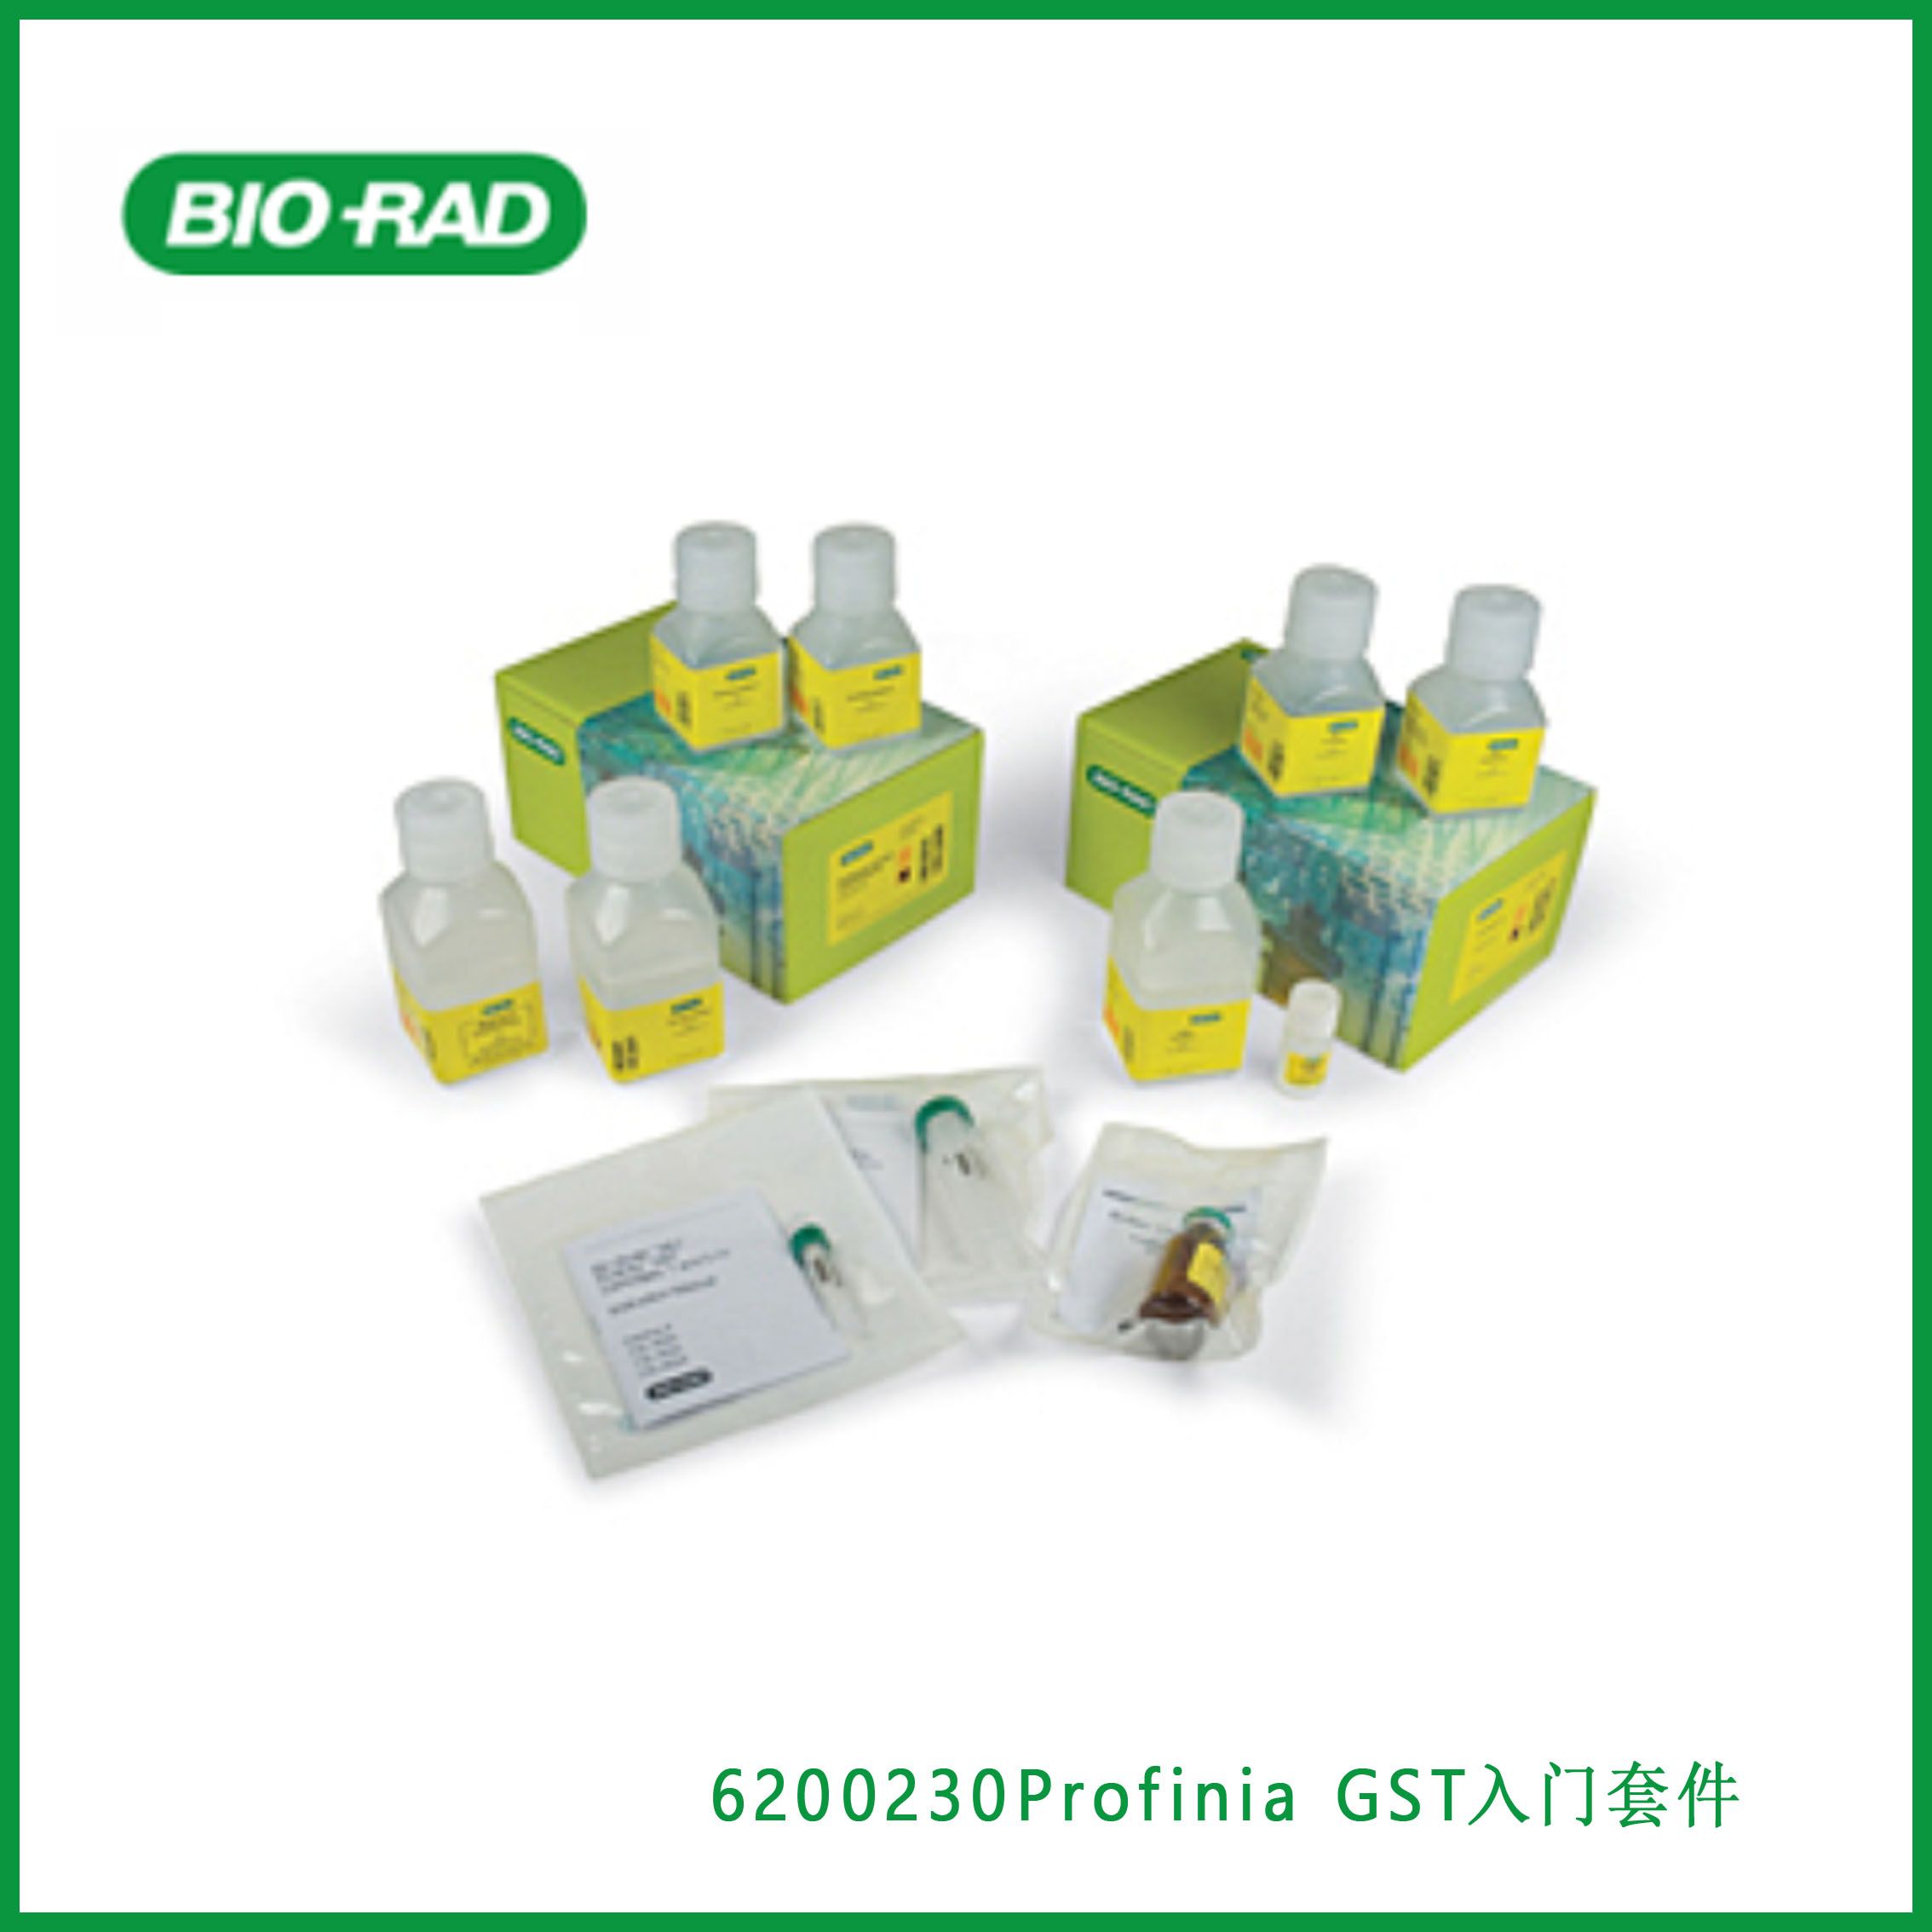 伯乐Bio-Rad 6200230Profinia GST Starter Kit，Profinia GST入门套件，现货